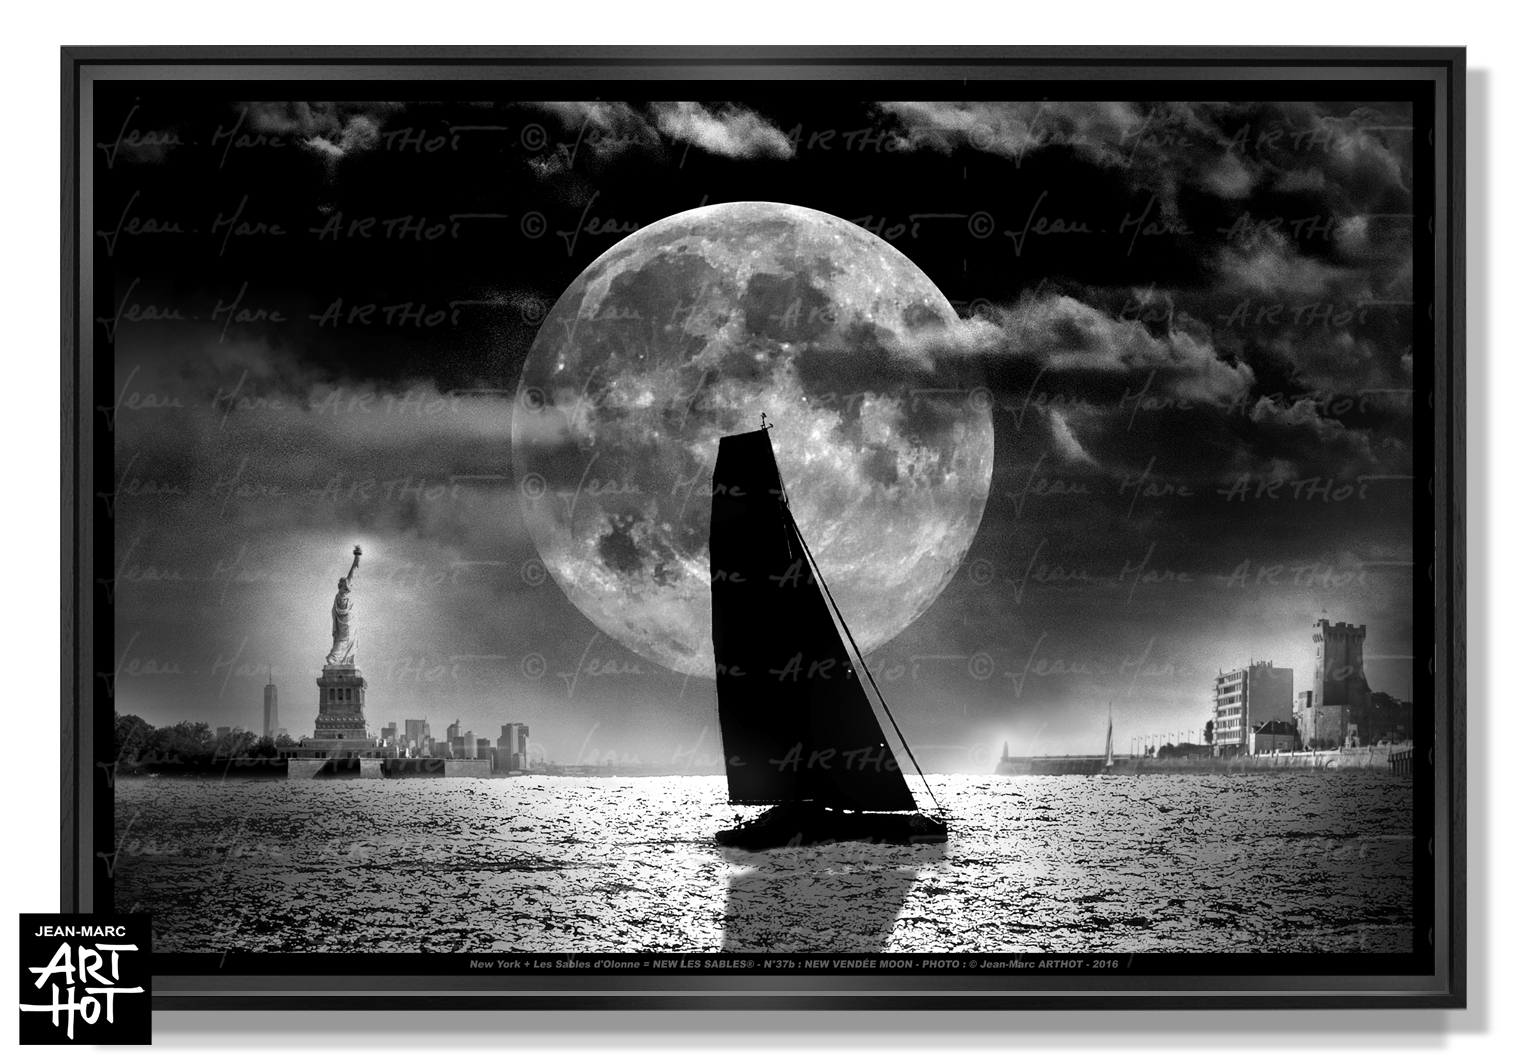 arthot-photo-art-b&amp;w-new-york-vendee-sables-olonne-newlessables-037_bis-moon-luneliberty-chaume-horiz